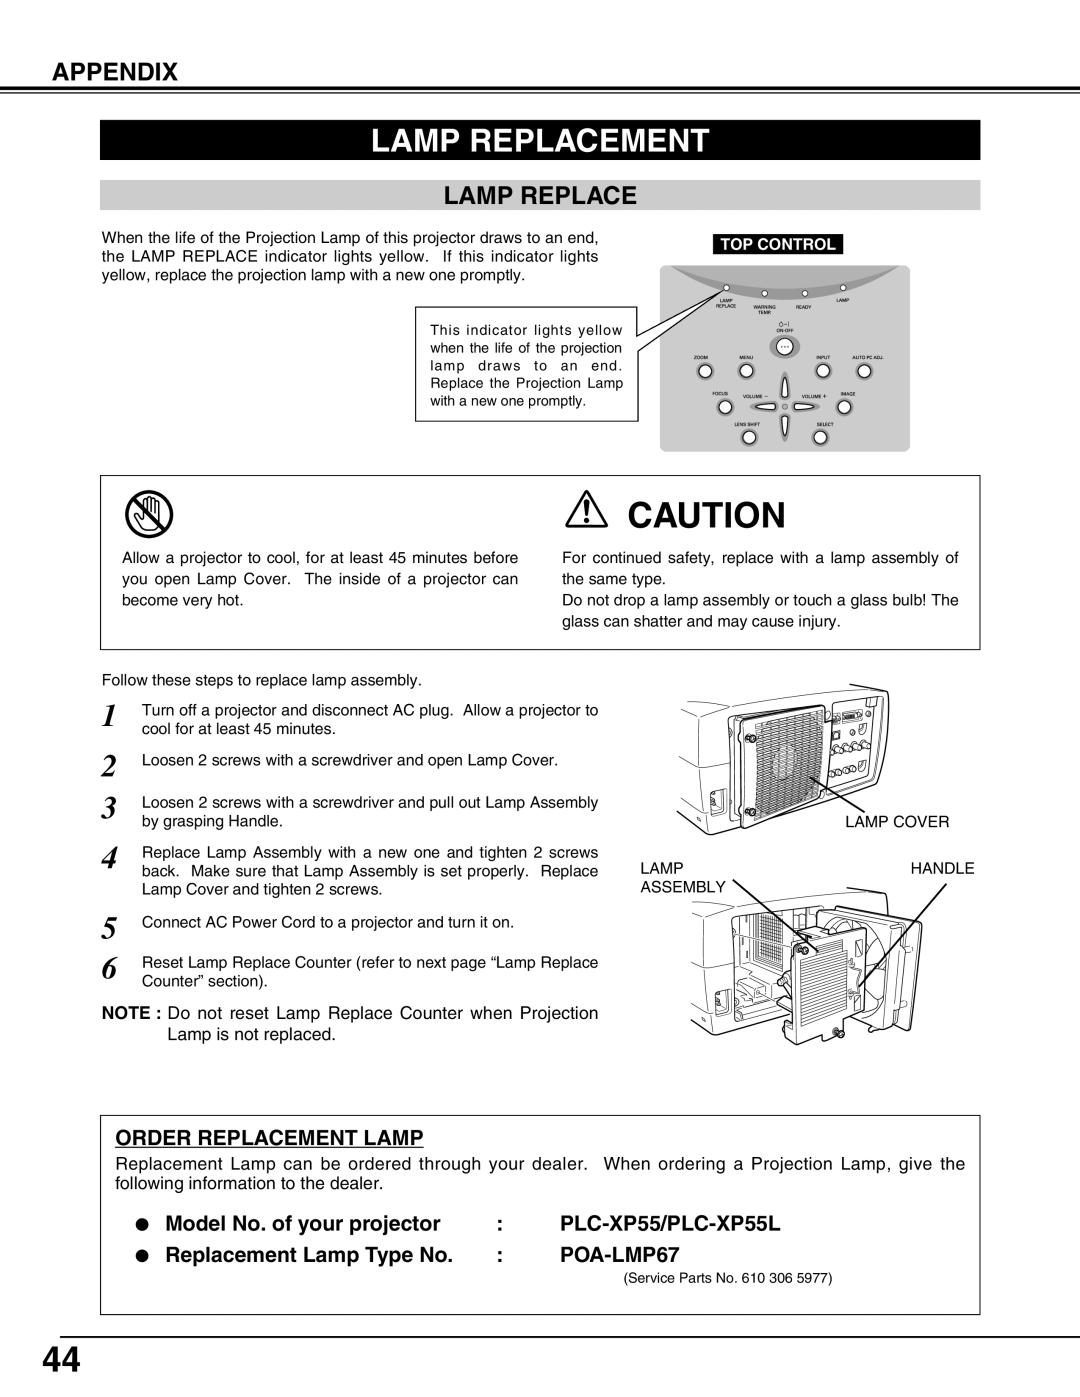 Sanyo PLC-XP55L owner manual Lamp Replacement, Appendix 